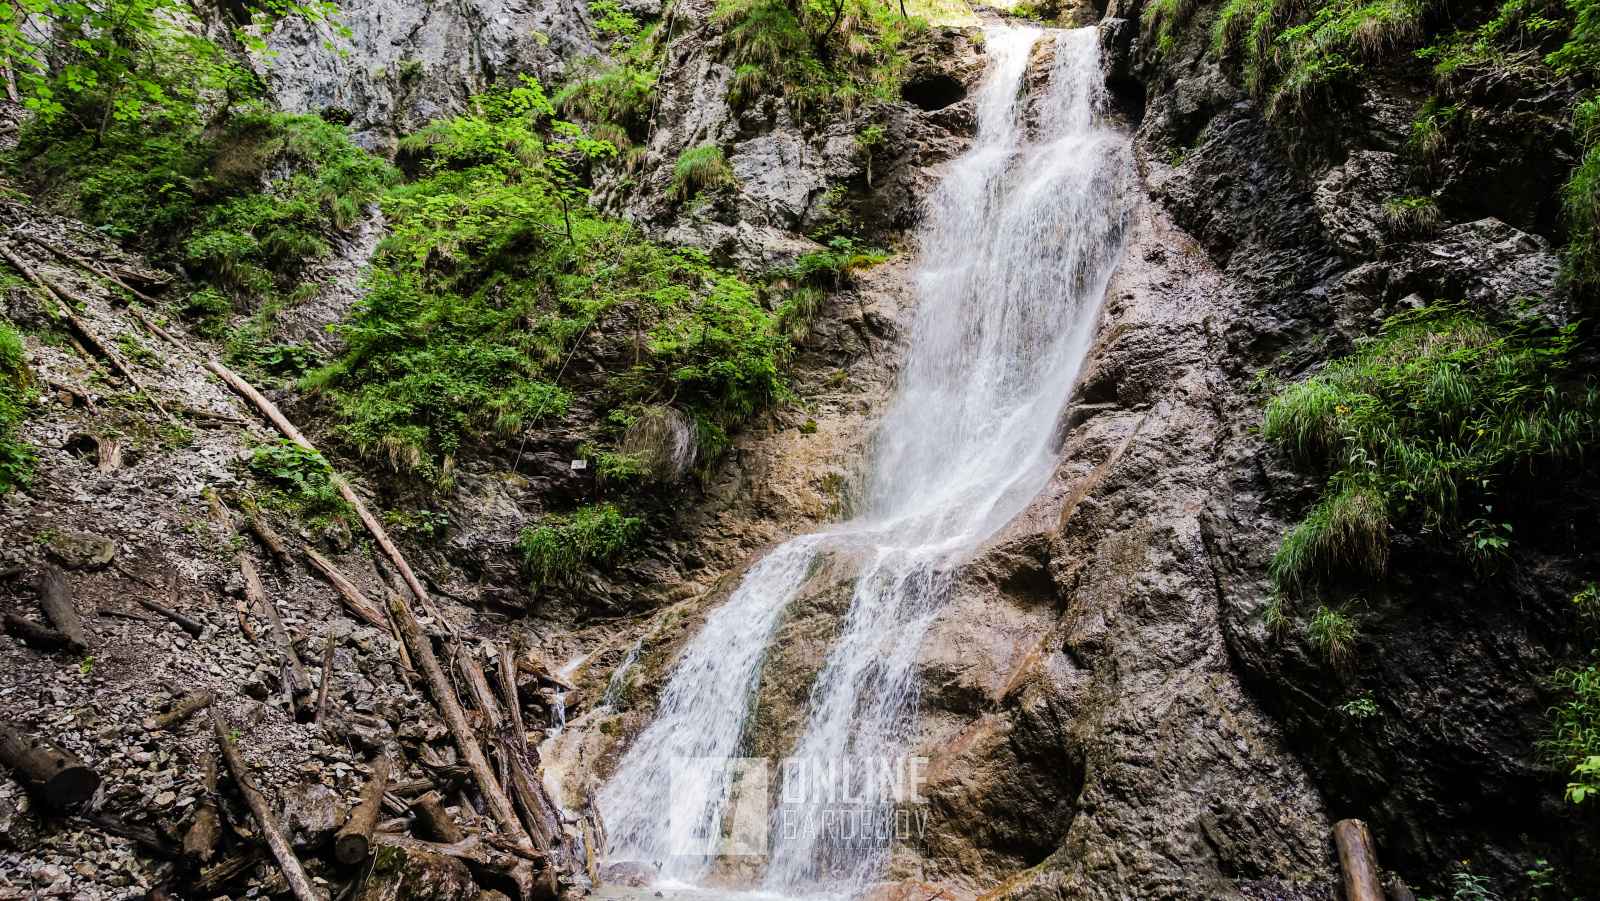 Obrovský vodopád - jeden z najkrajších vodopádov v Slovenskom raji